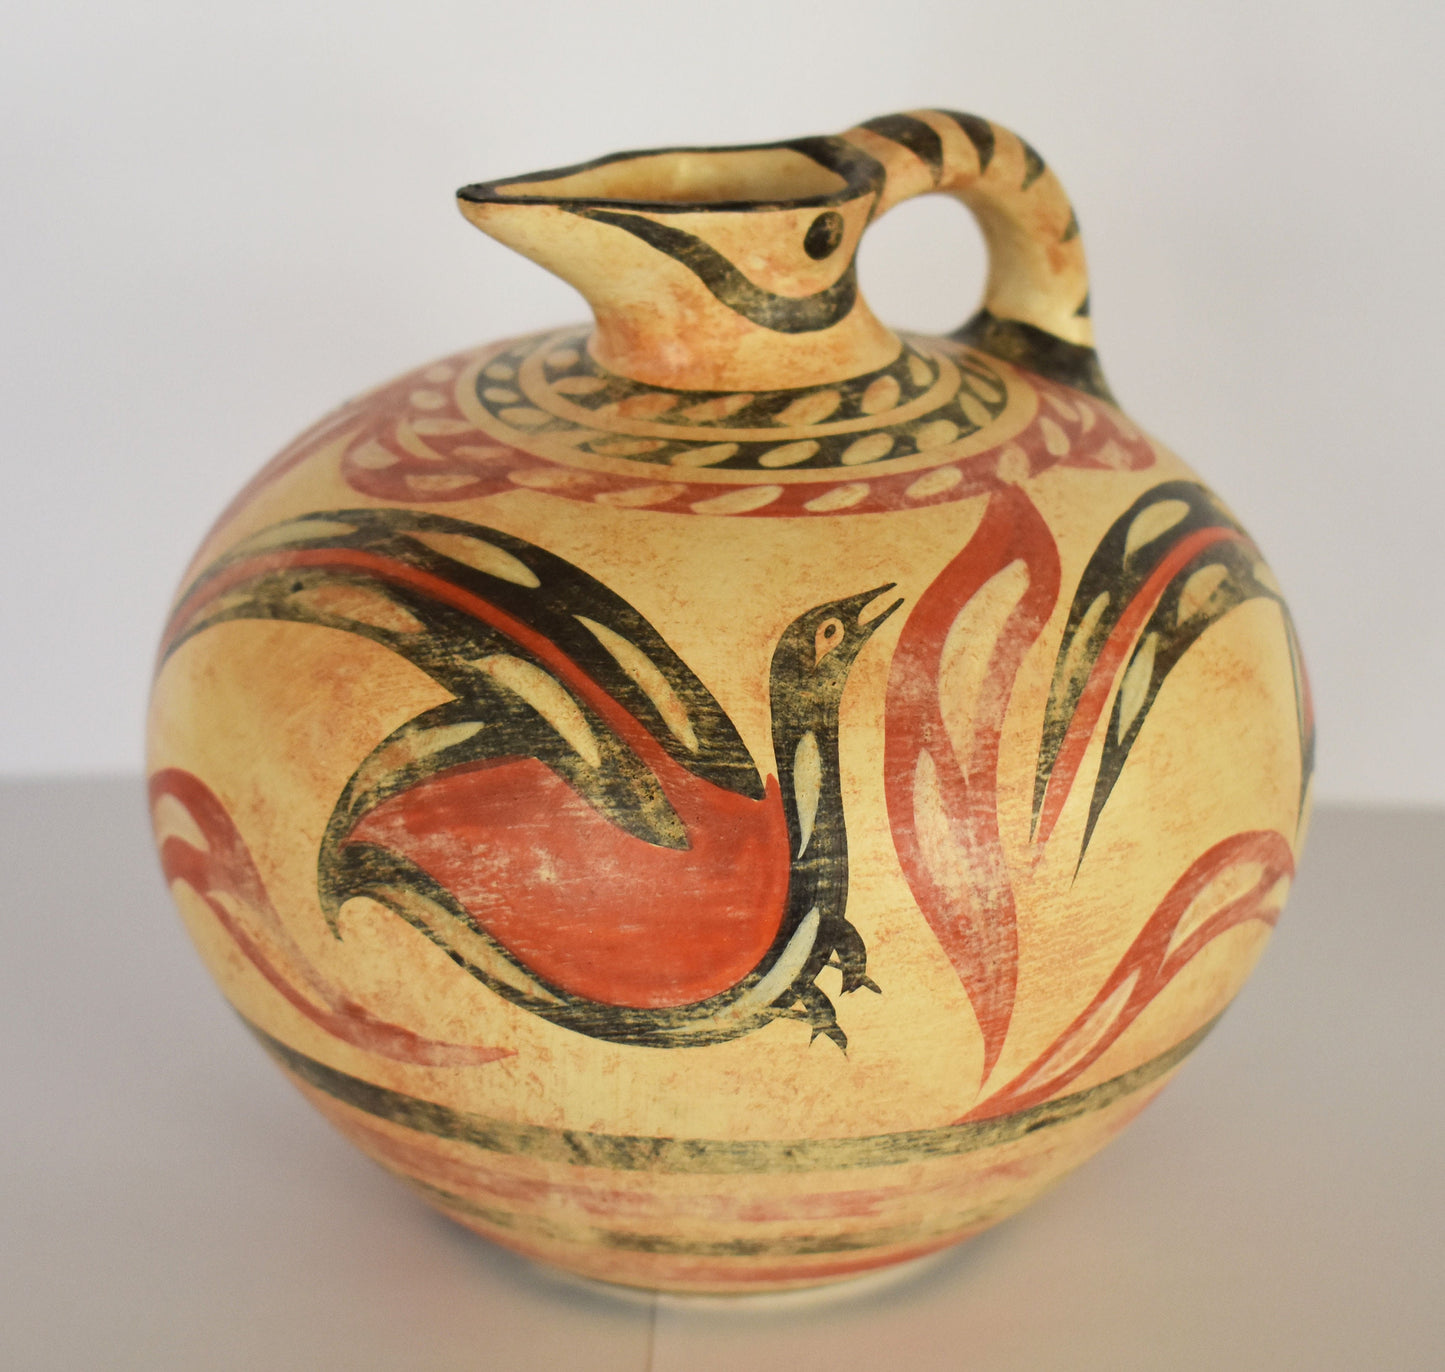 Vessel with Bird - Minoan - Akrotiri, Thera - 1700 BC - Small - Ceramic Vase